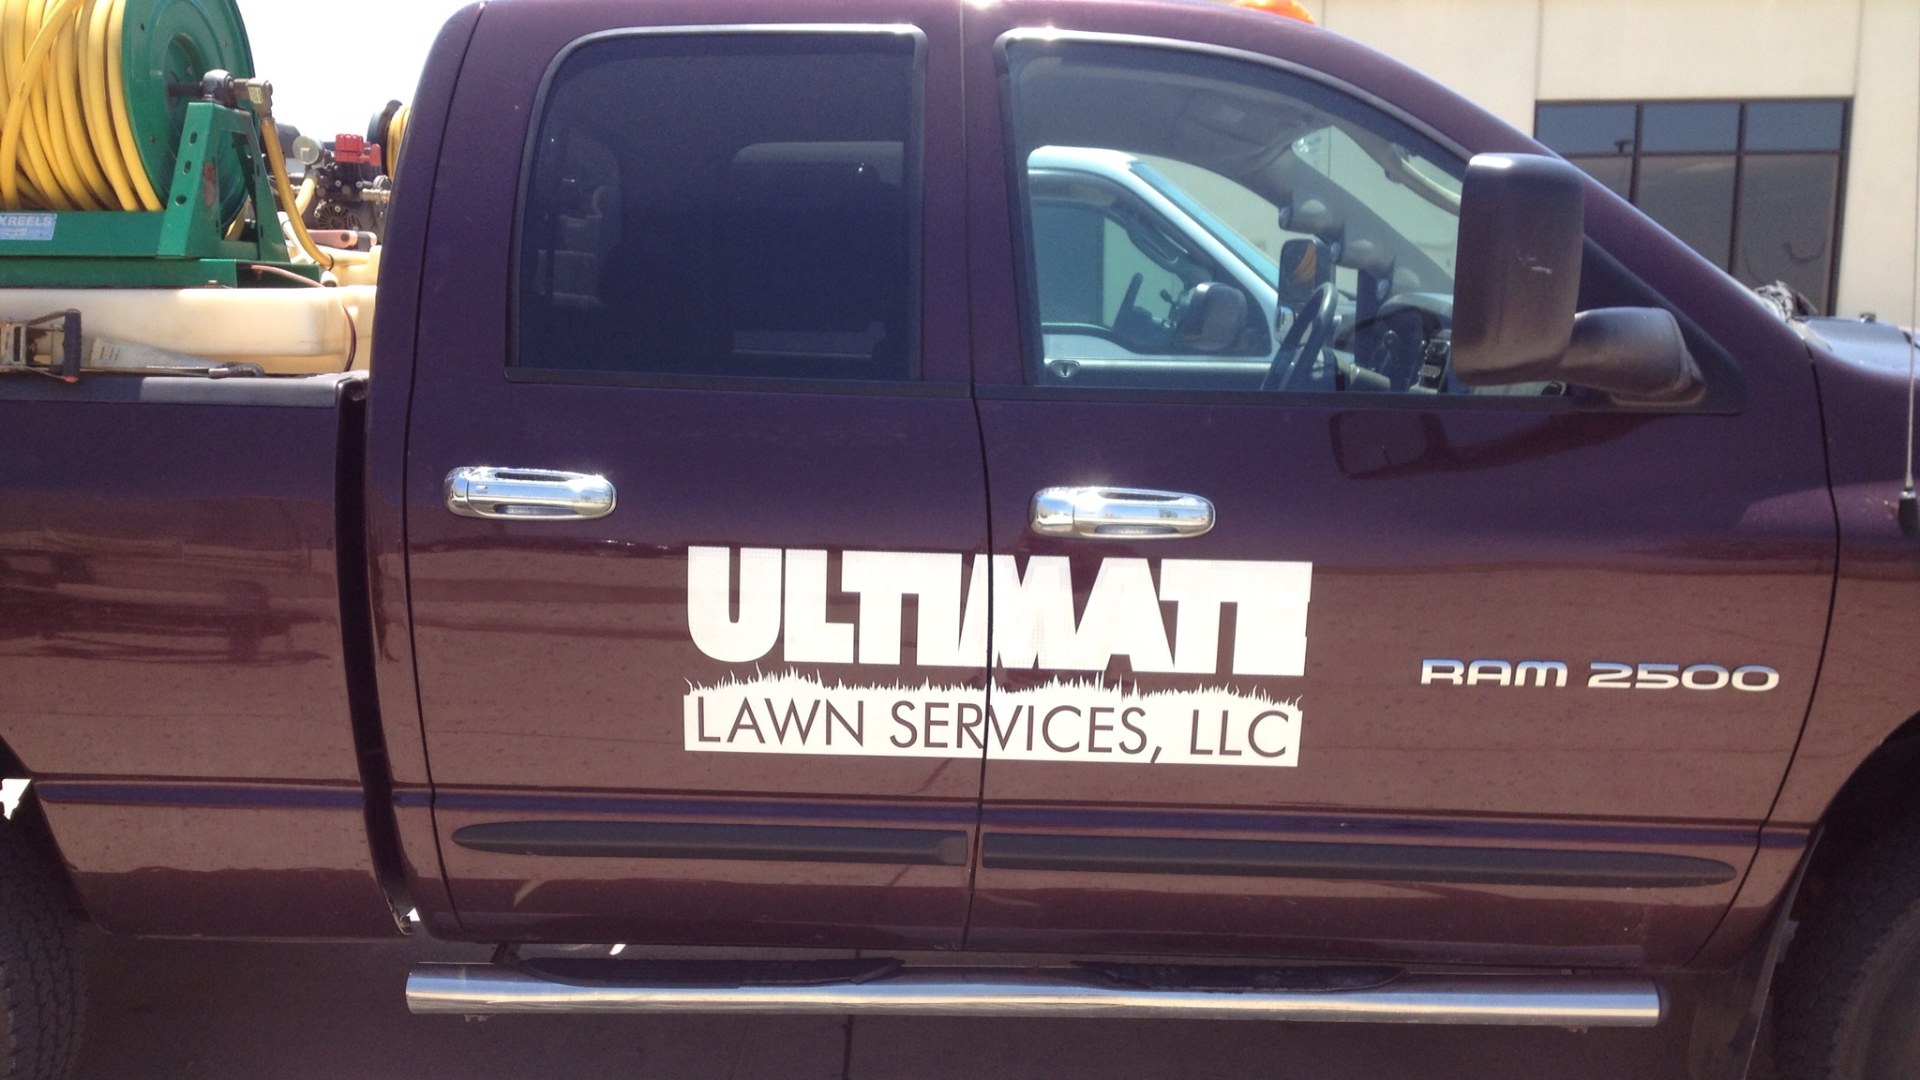 Ultimate workers truck displayed in Urbandale, IA.